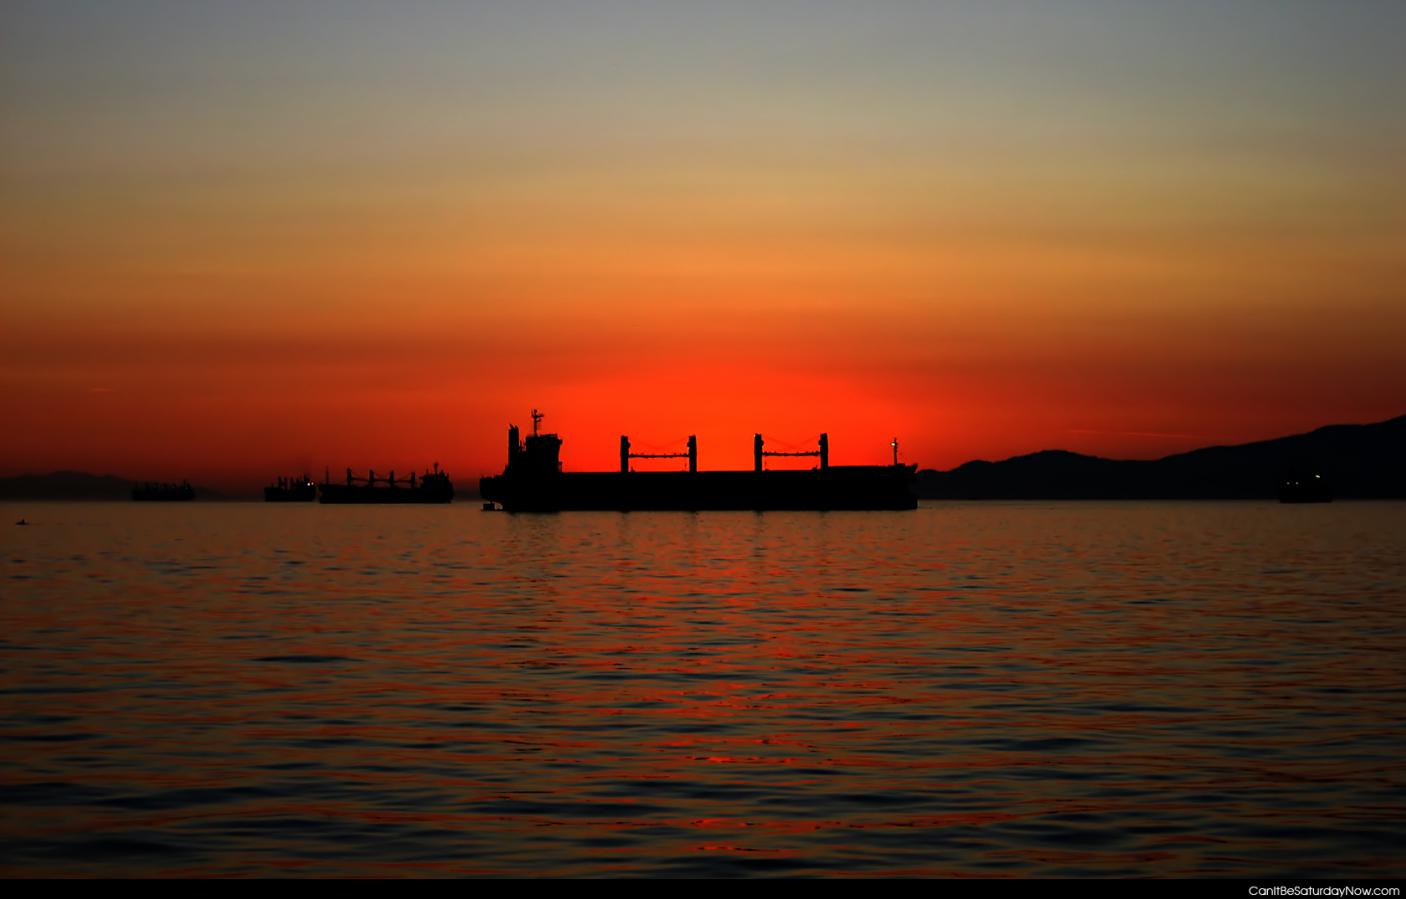 Tanker dawn - sunset over a tanker ship